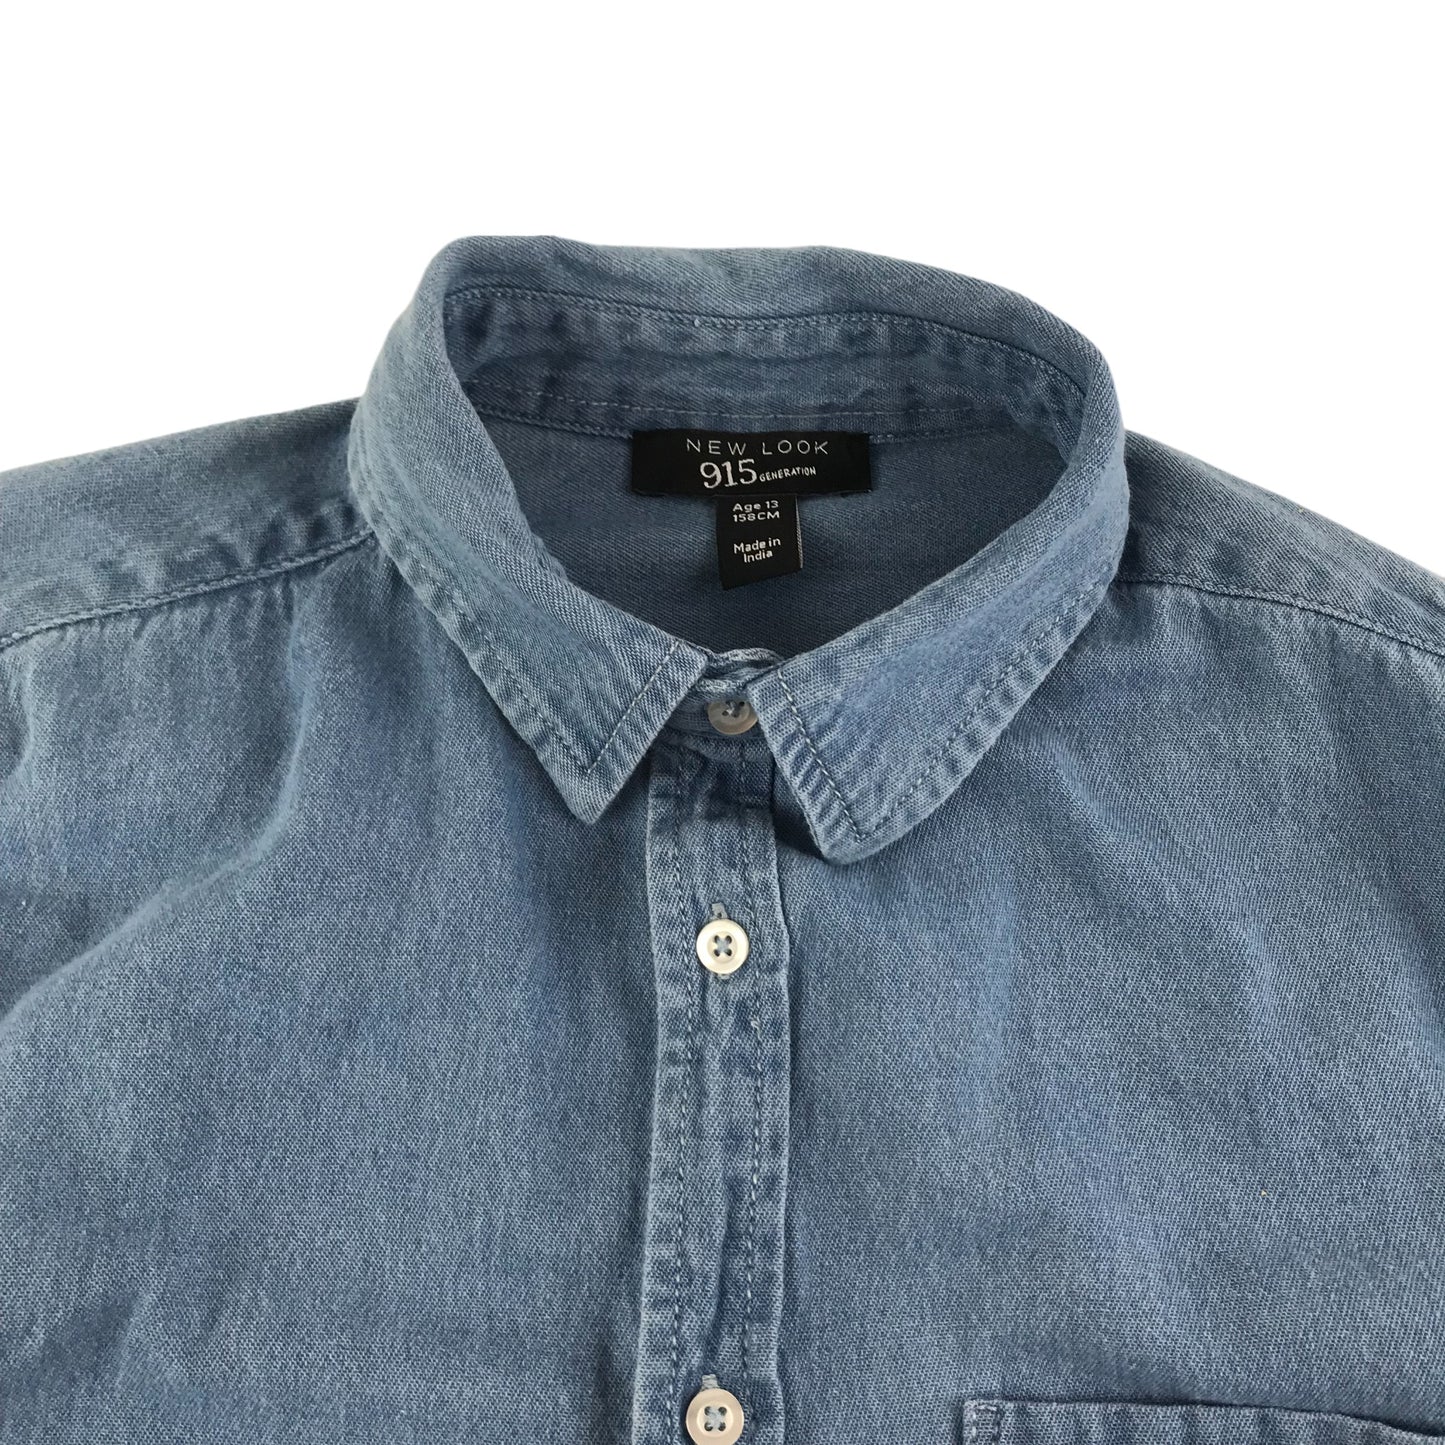 New Look Shirt Age 13 Blue Denim Cotton Long Sleeve